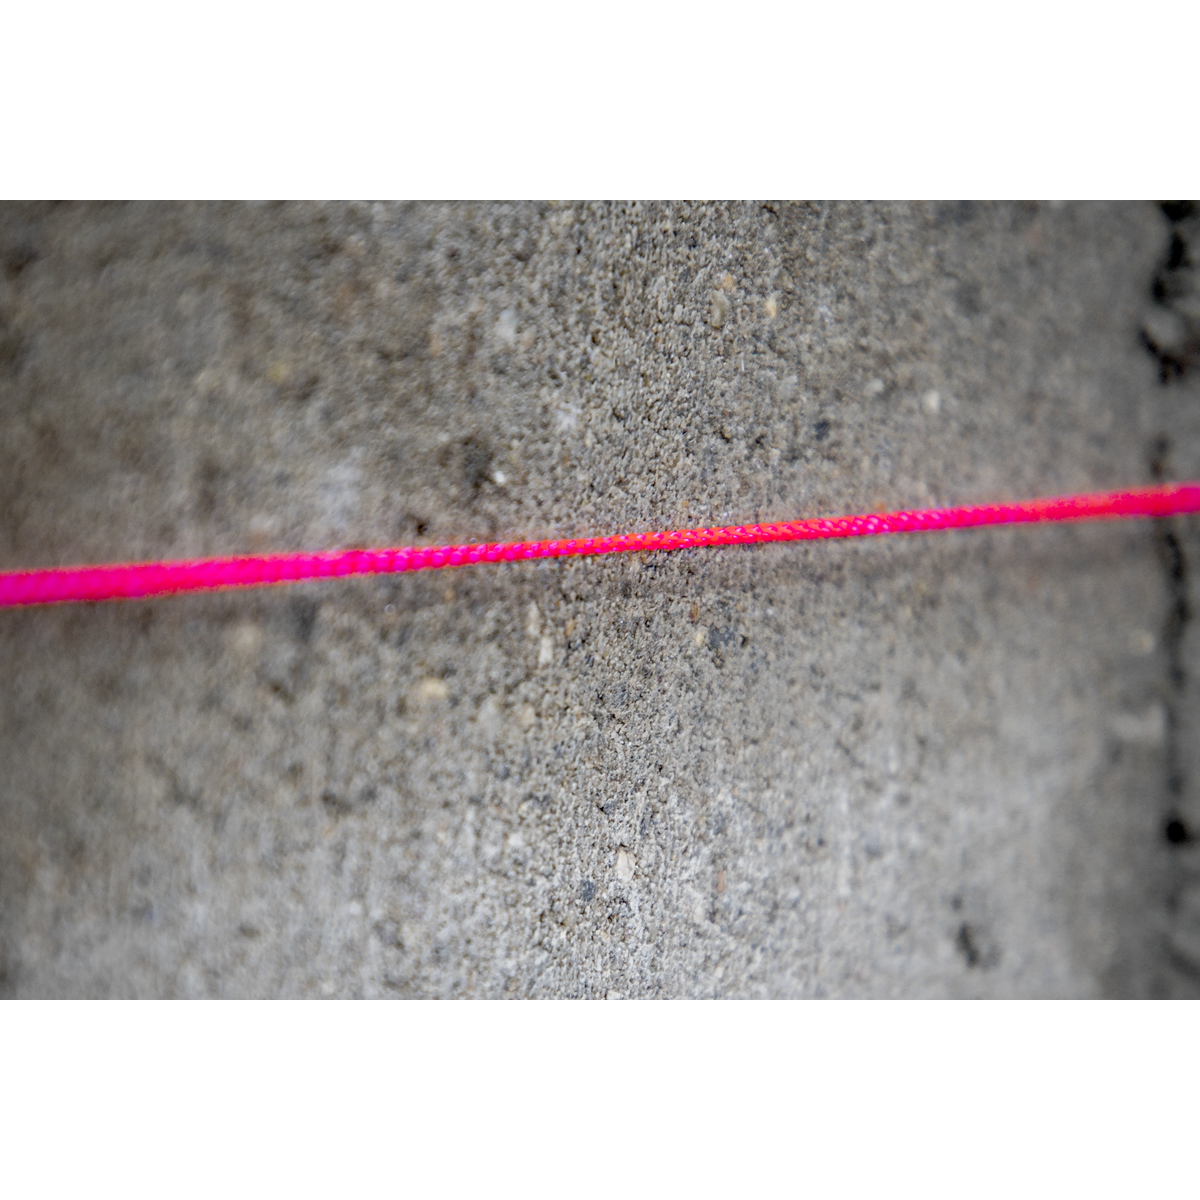 Braided Pink Nylon Brick Line - 76m